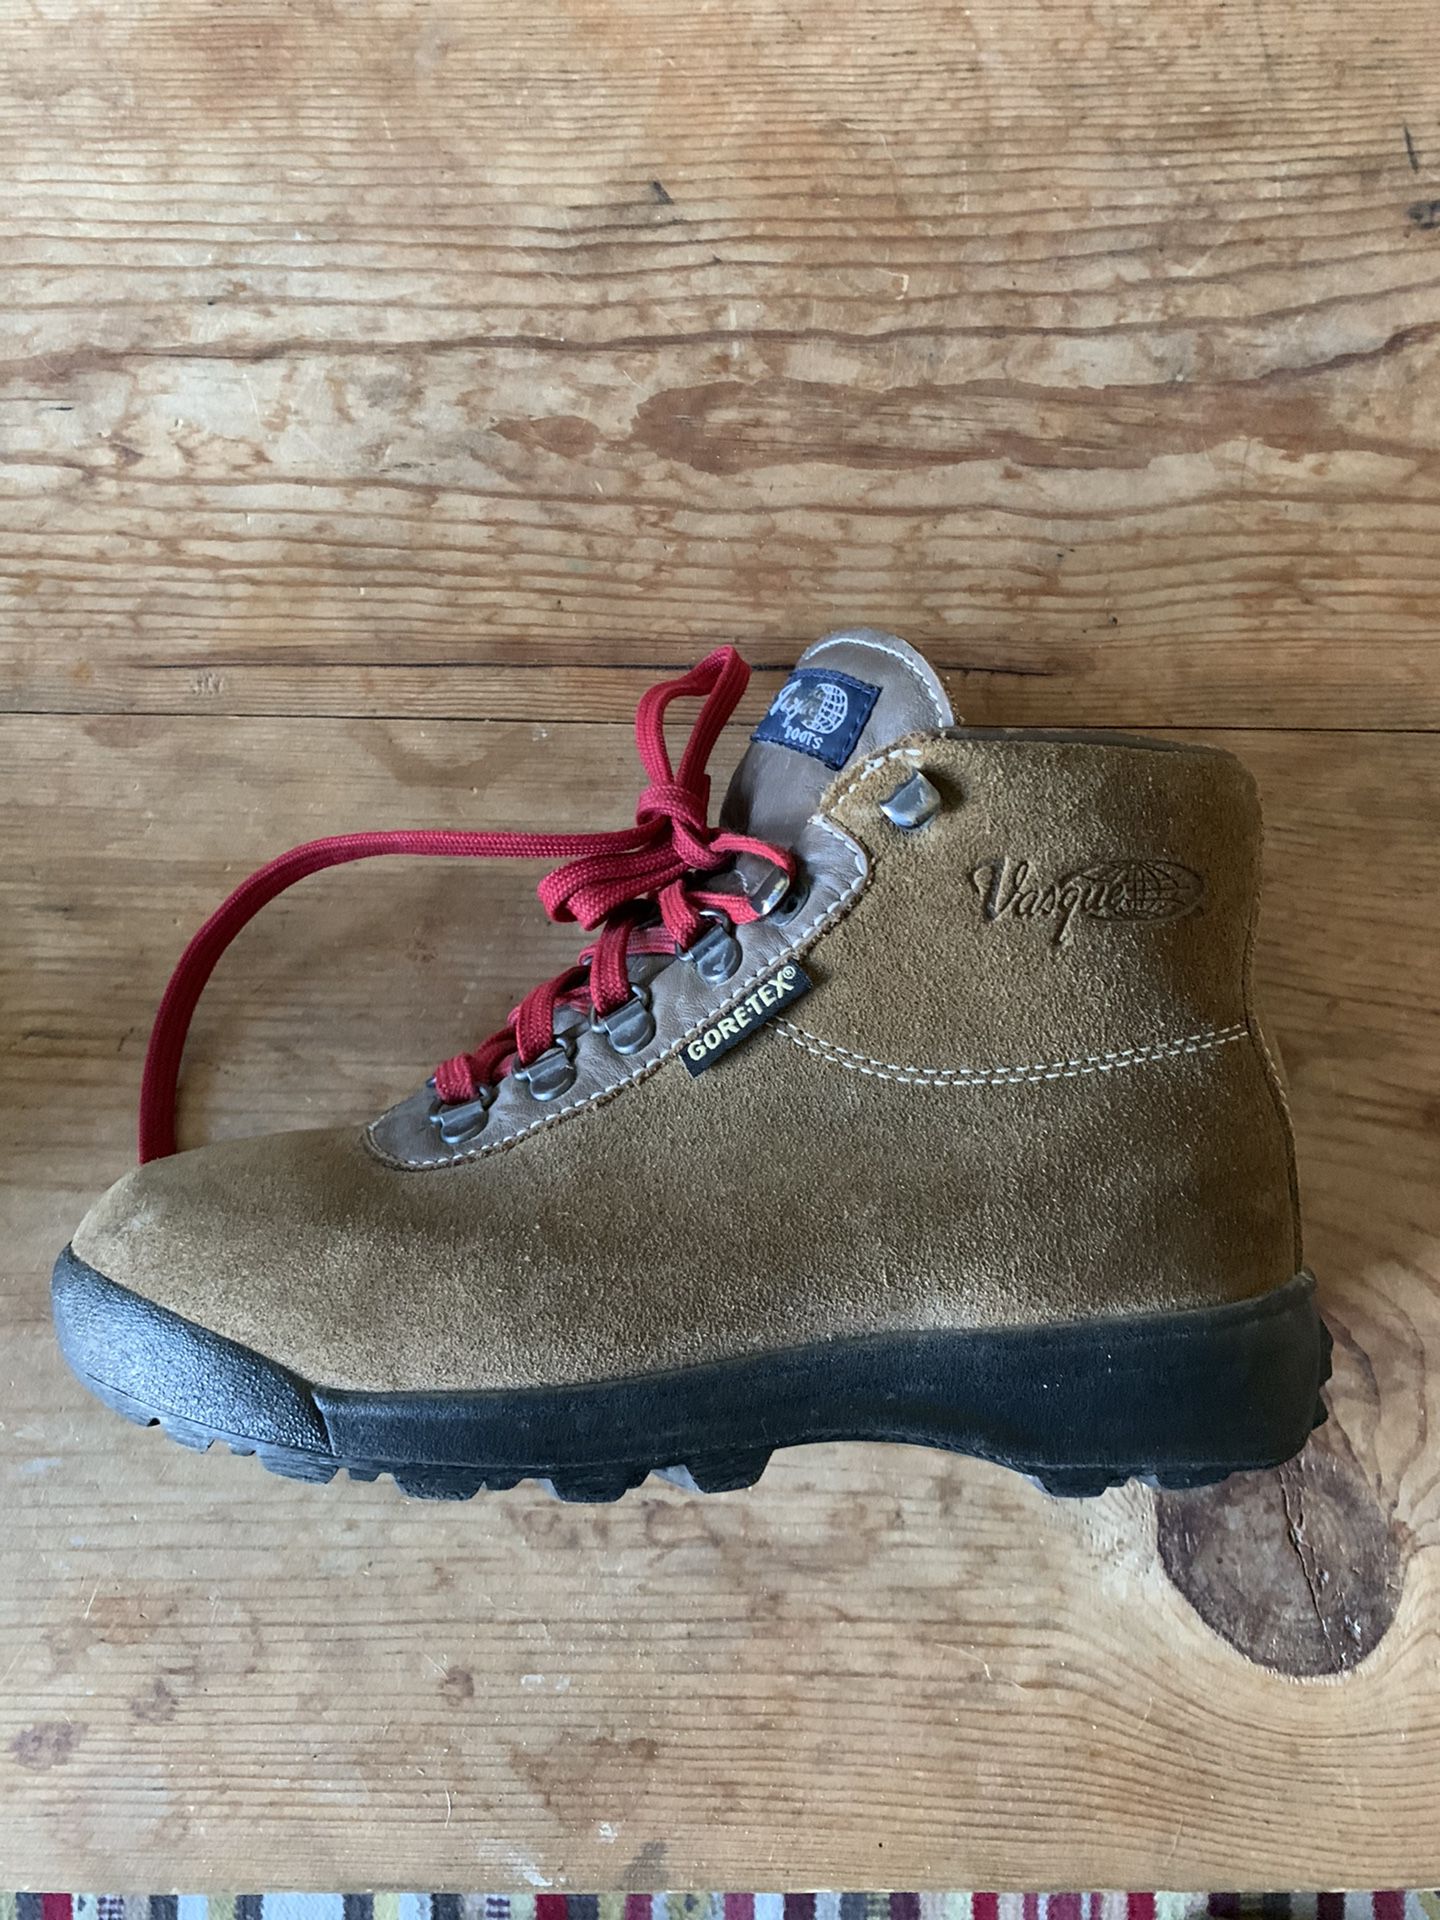 Vasque Sundowner women’s Gore Tex hiking boots